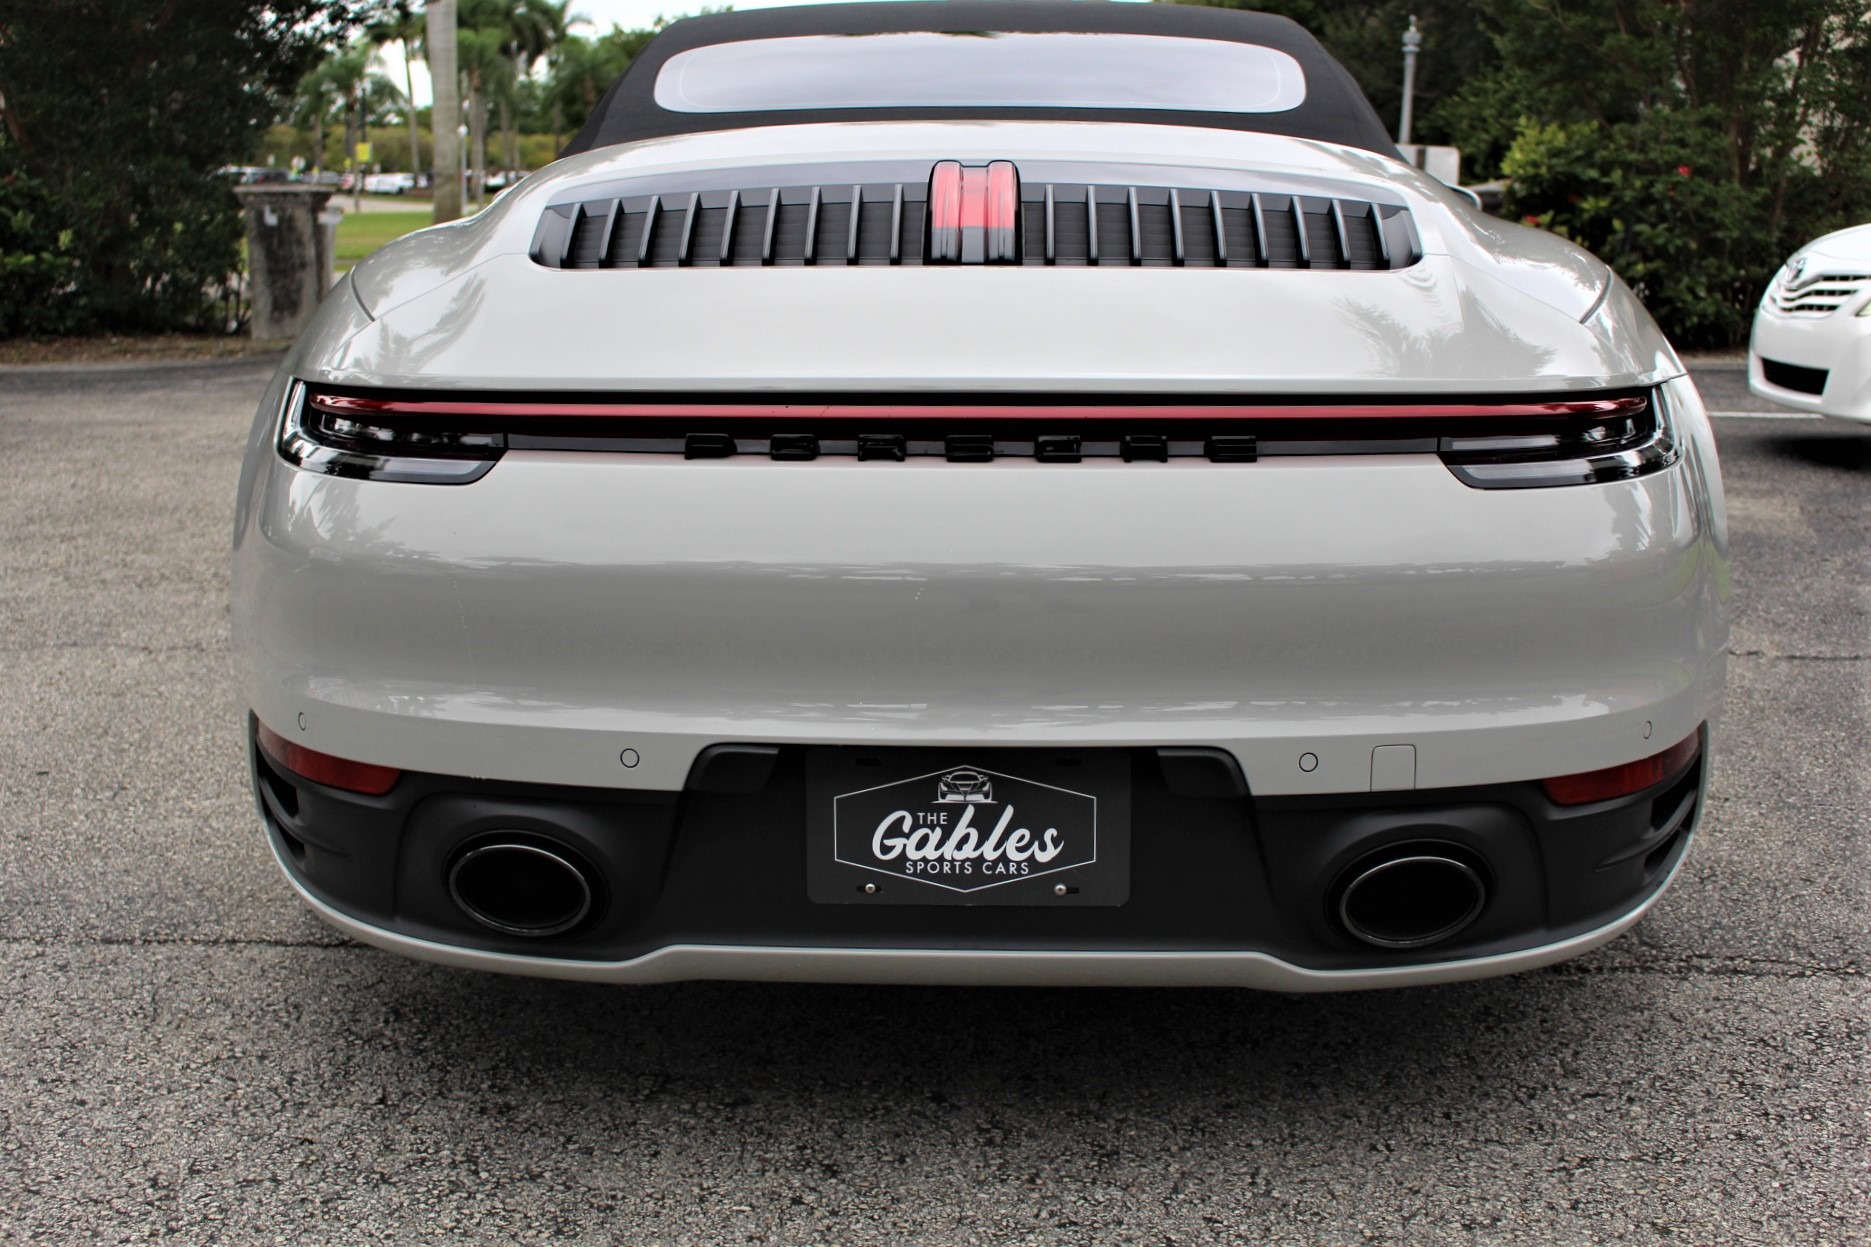 Used 2020 Porsche 911 Carrera S for sale $169,850 at The Gables Sports Cars in Miami FL 33146 4